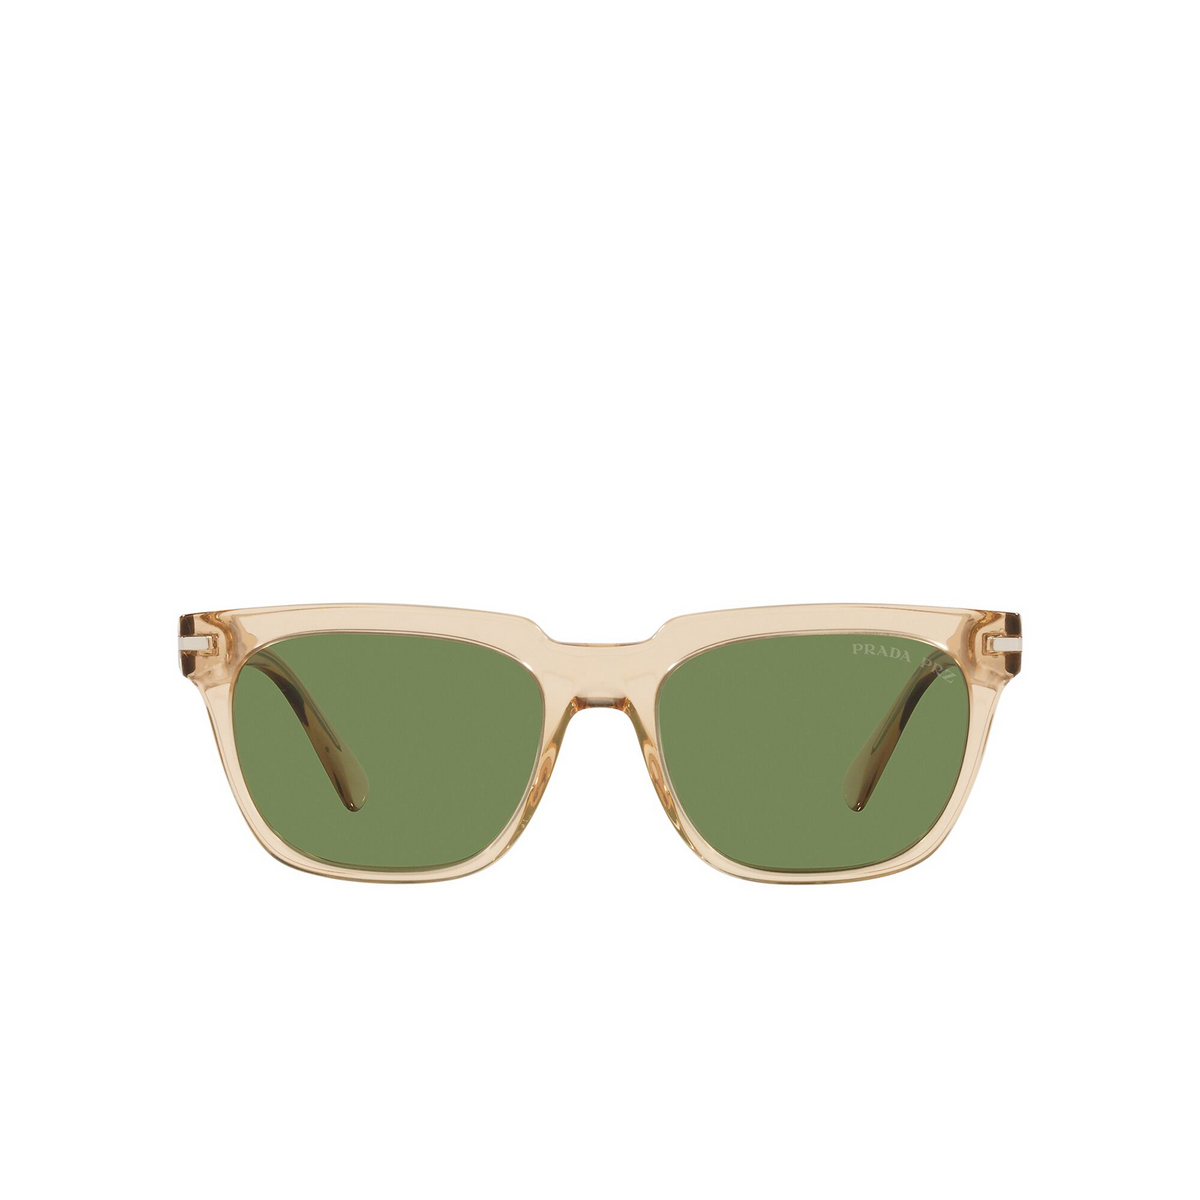 Prada® Square Sunglasses: PR 04YS color Trasparent Brown 01N08C - front view.